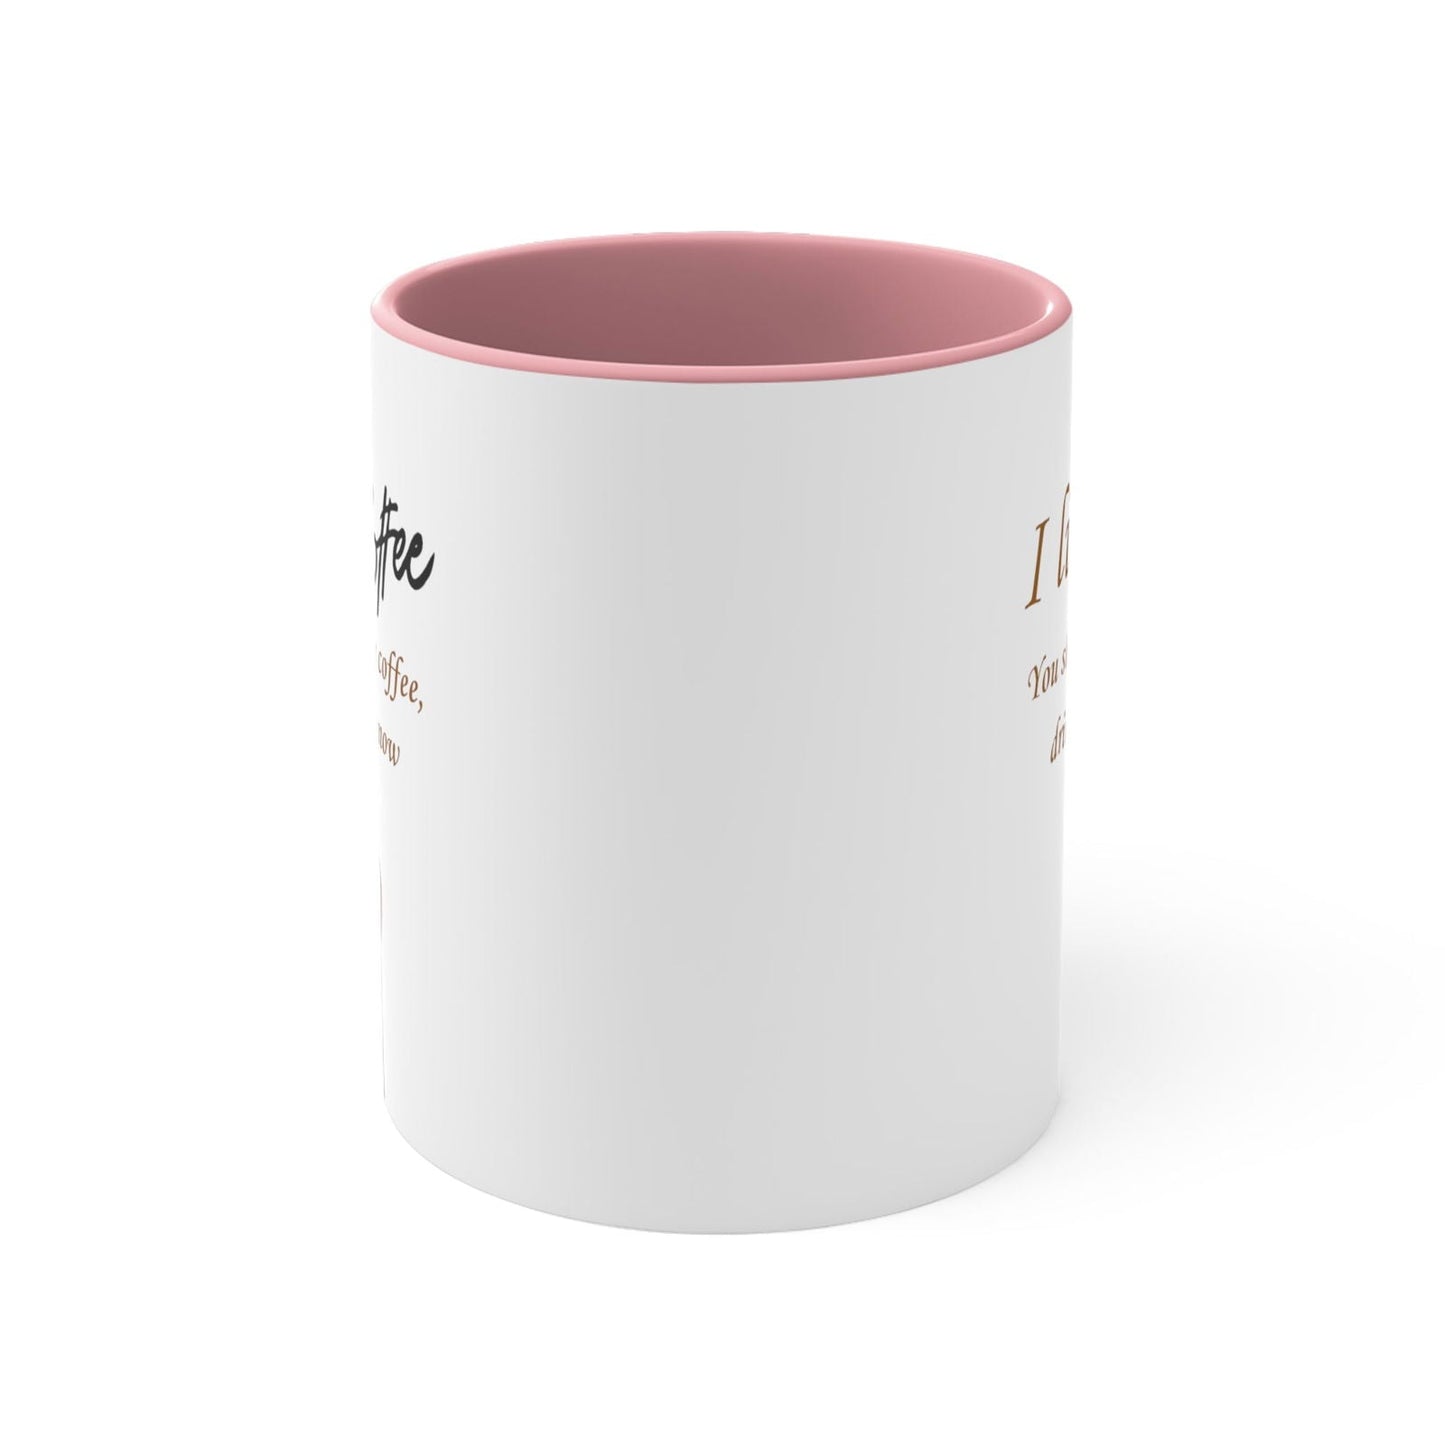 Coffe mug - I like Coffe - Alex's Store - 11oz - 